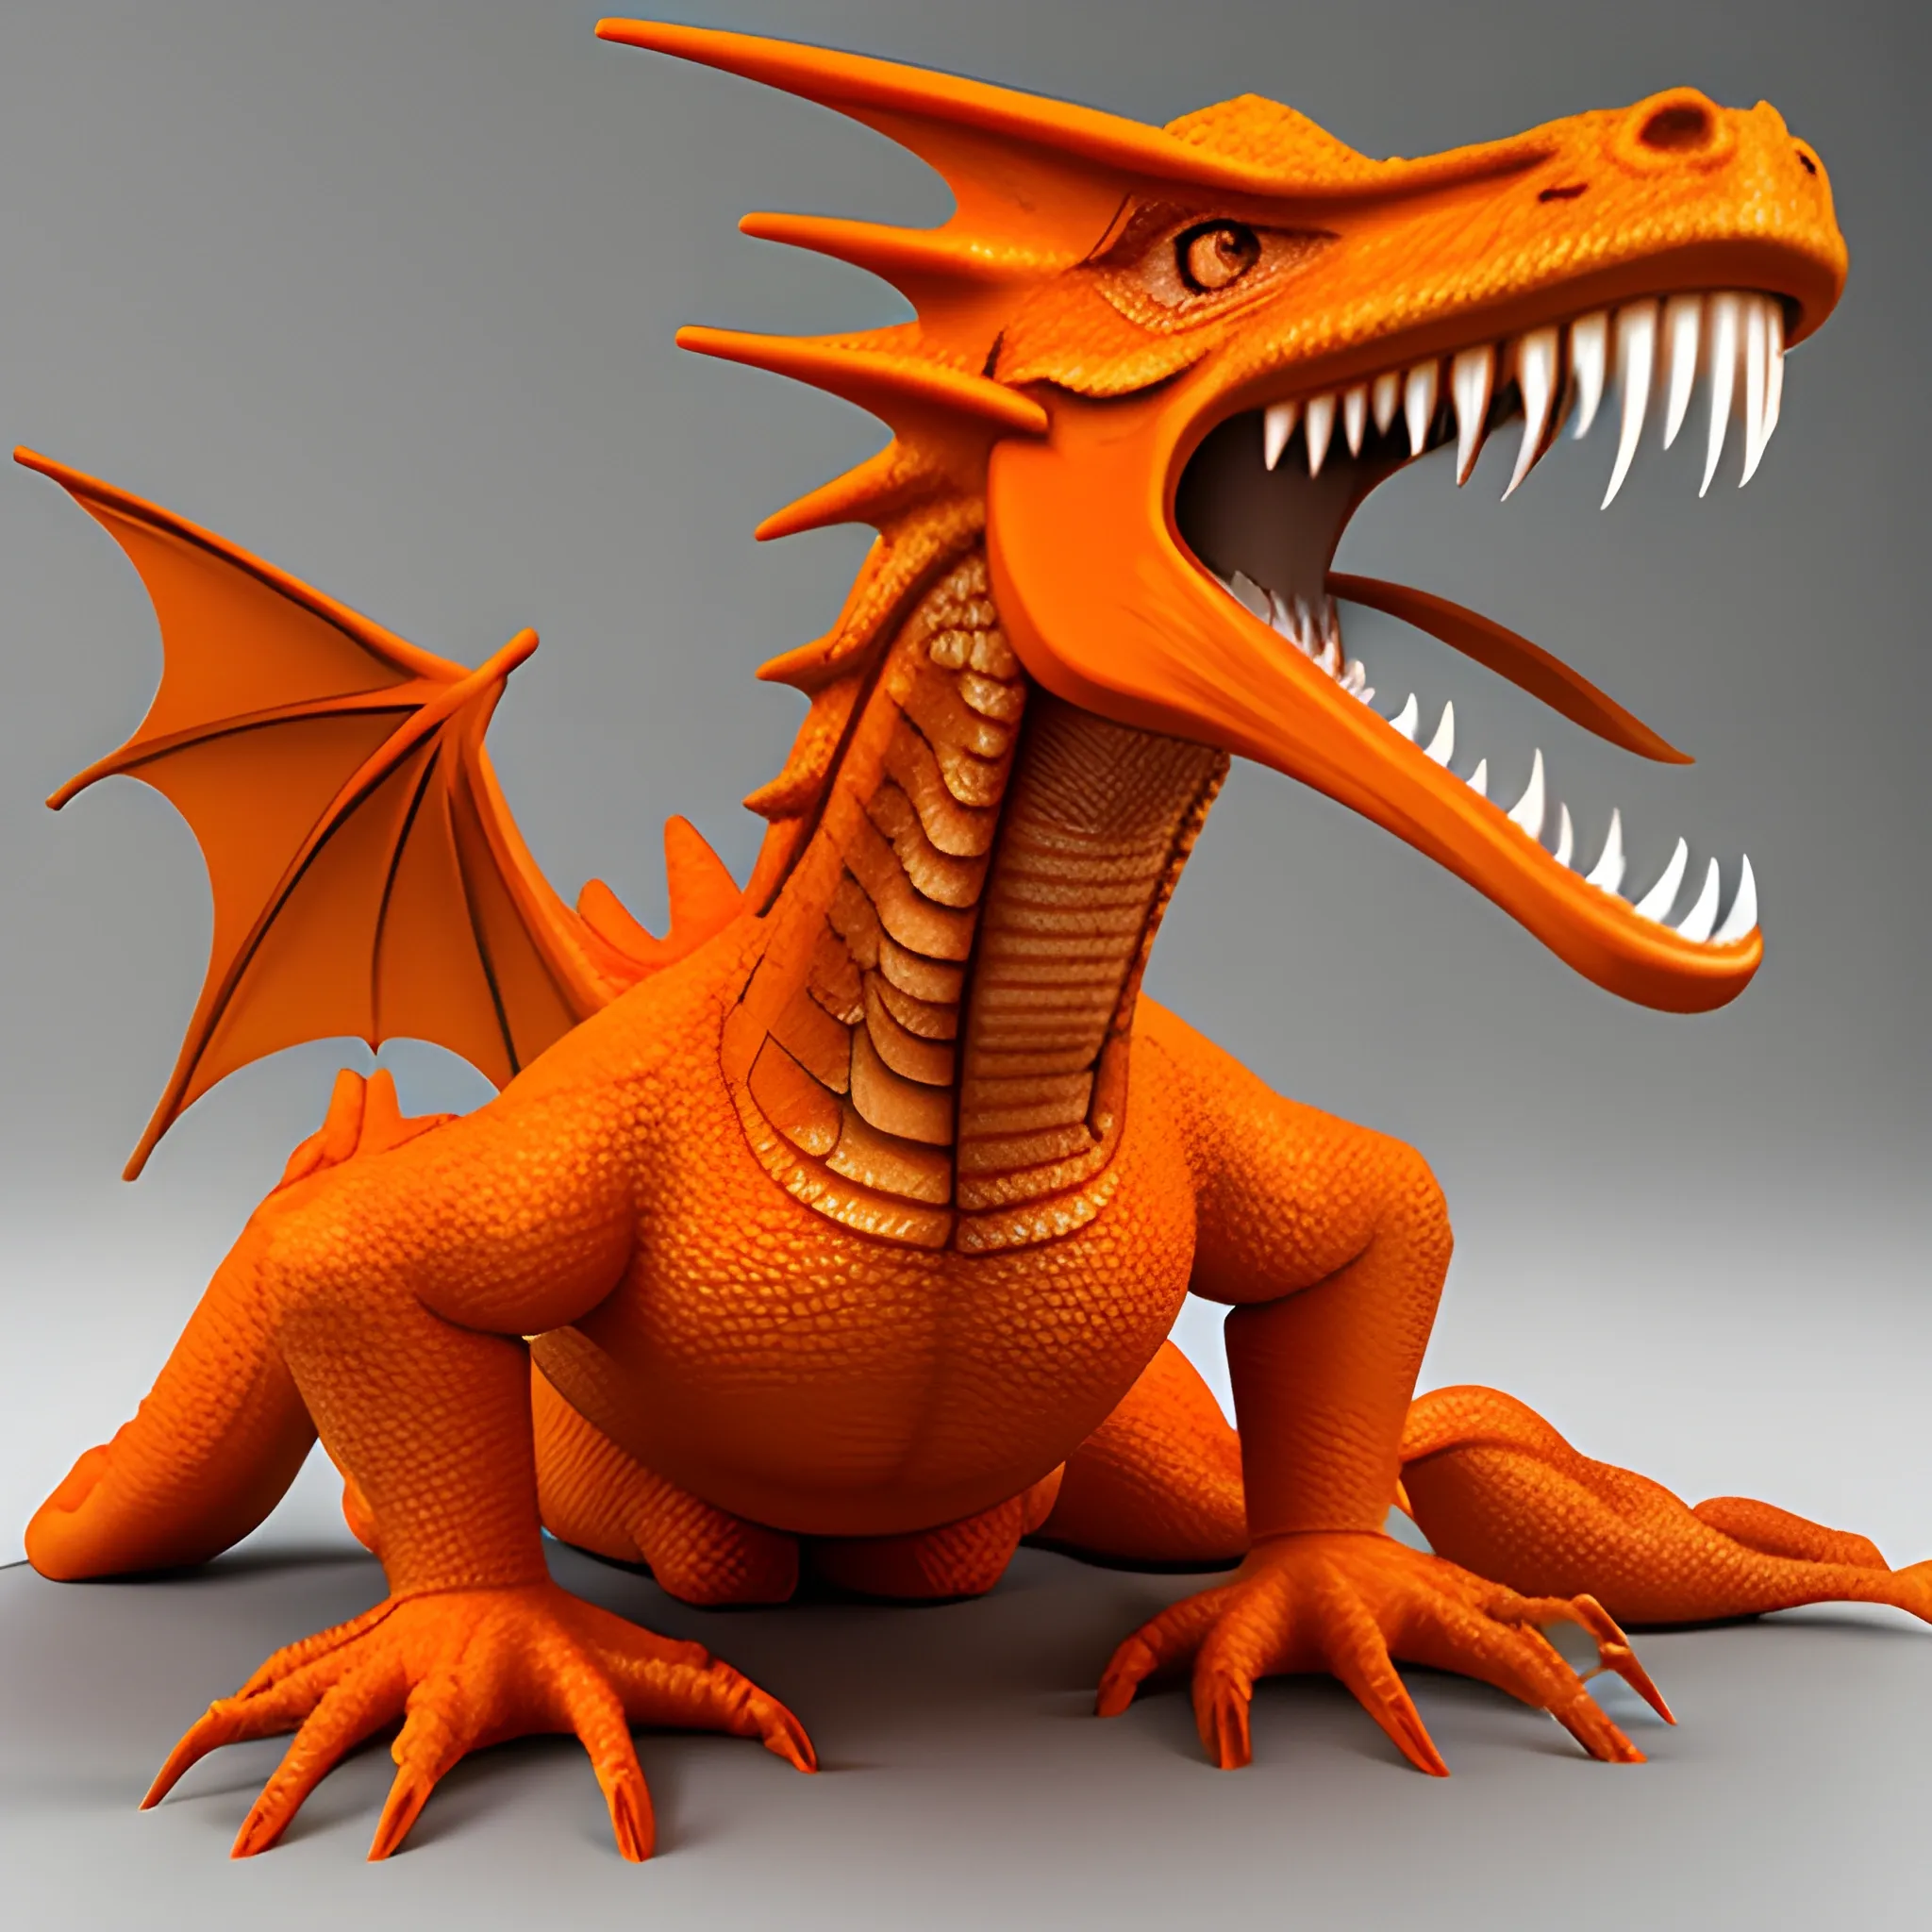 orange dragon, , 3D, eating person